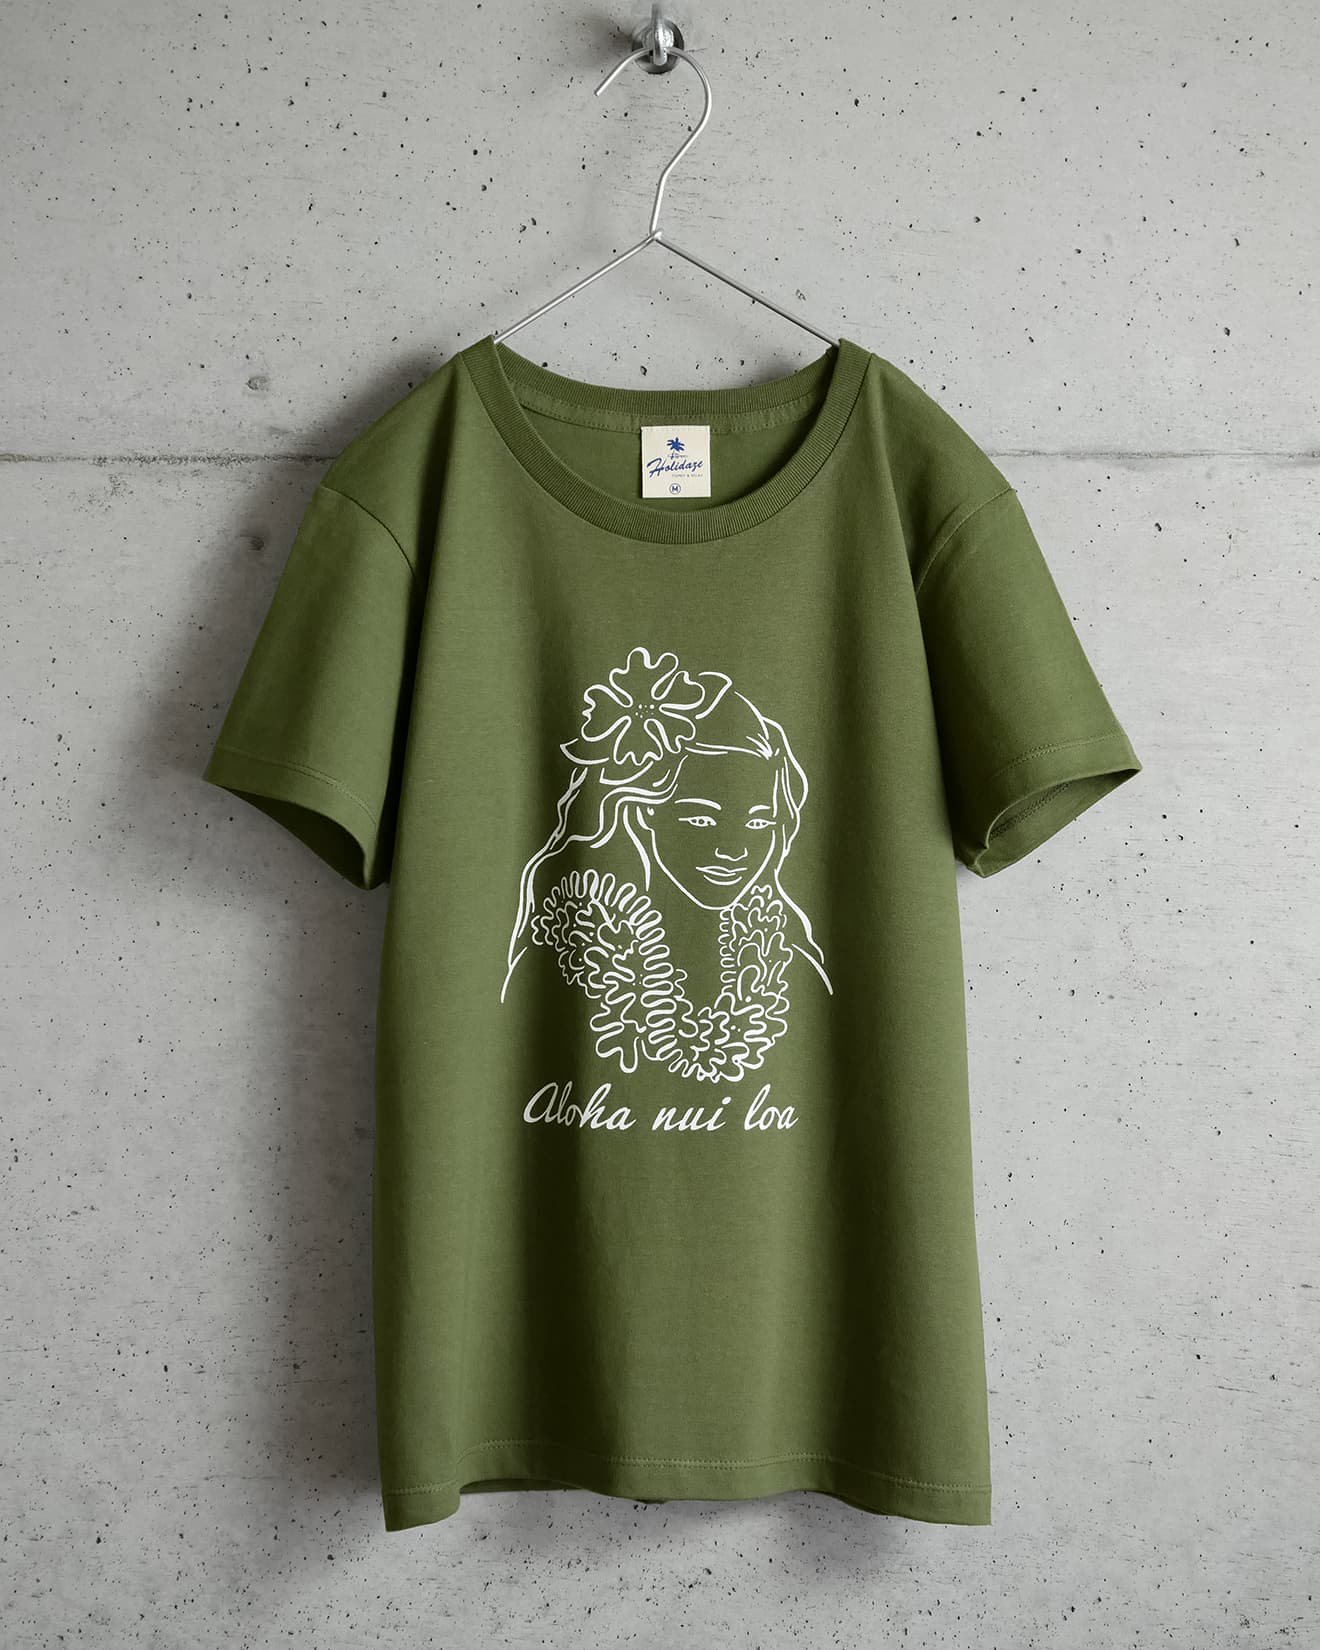 ALOHA NUI LOA - レディース フラTシャツ 限定色グリーン - HOLIDAZE